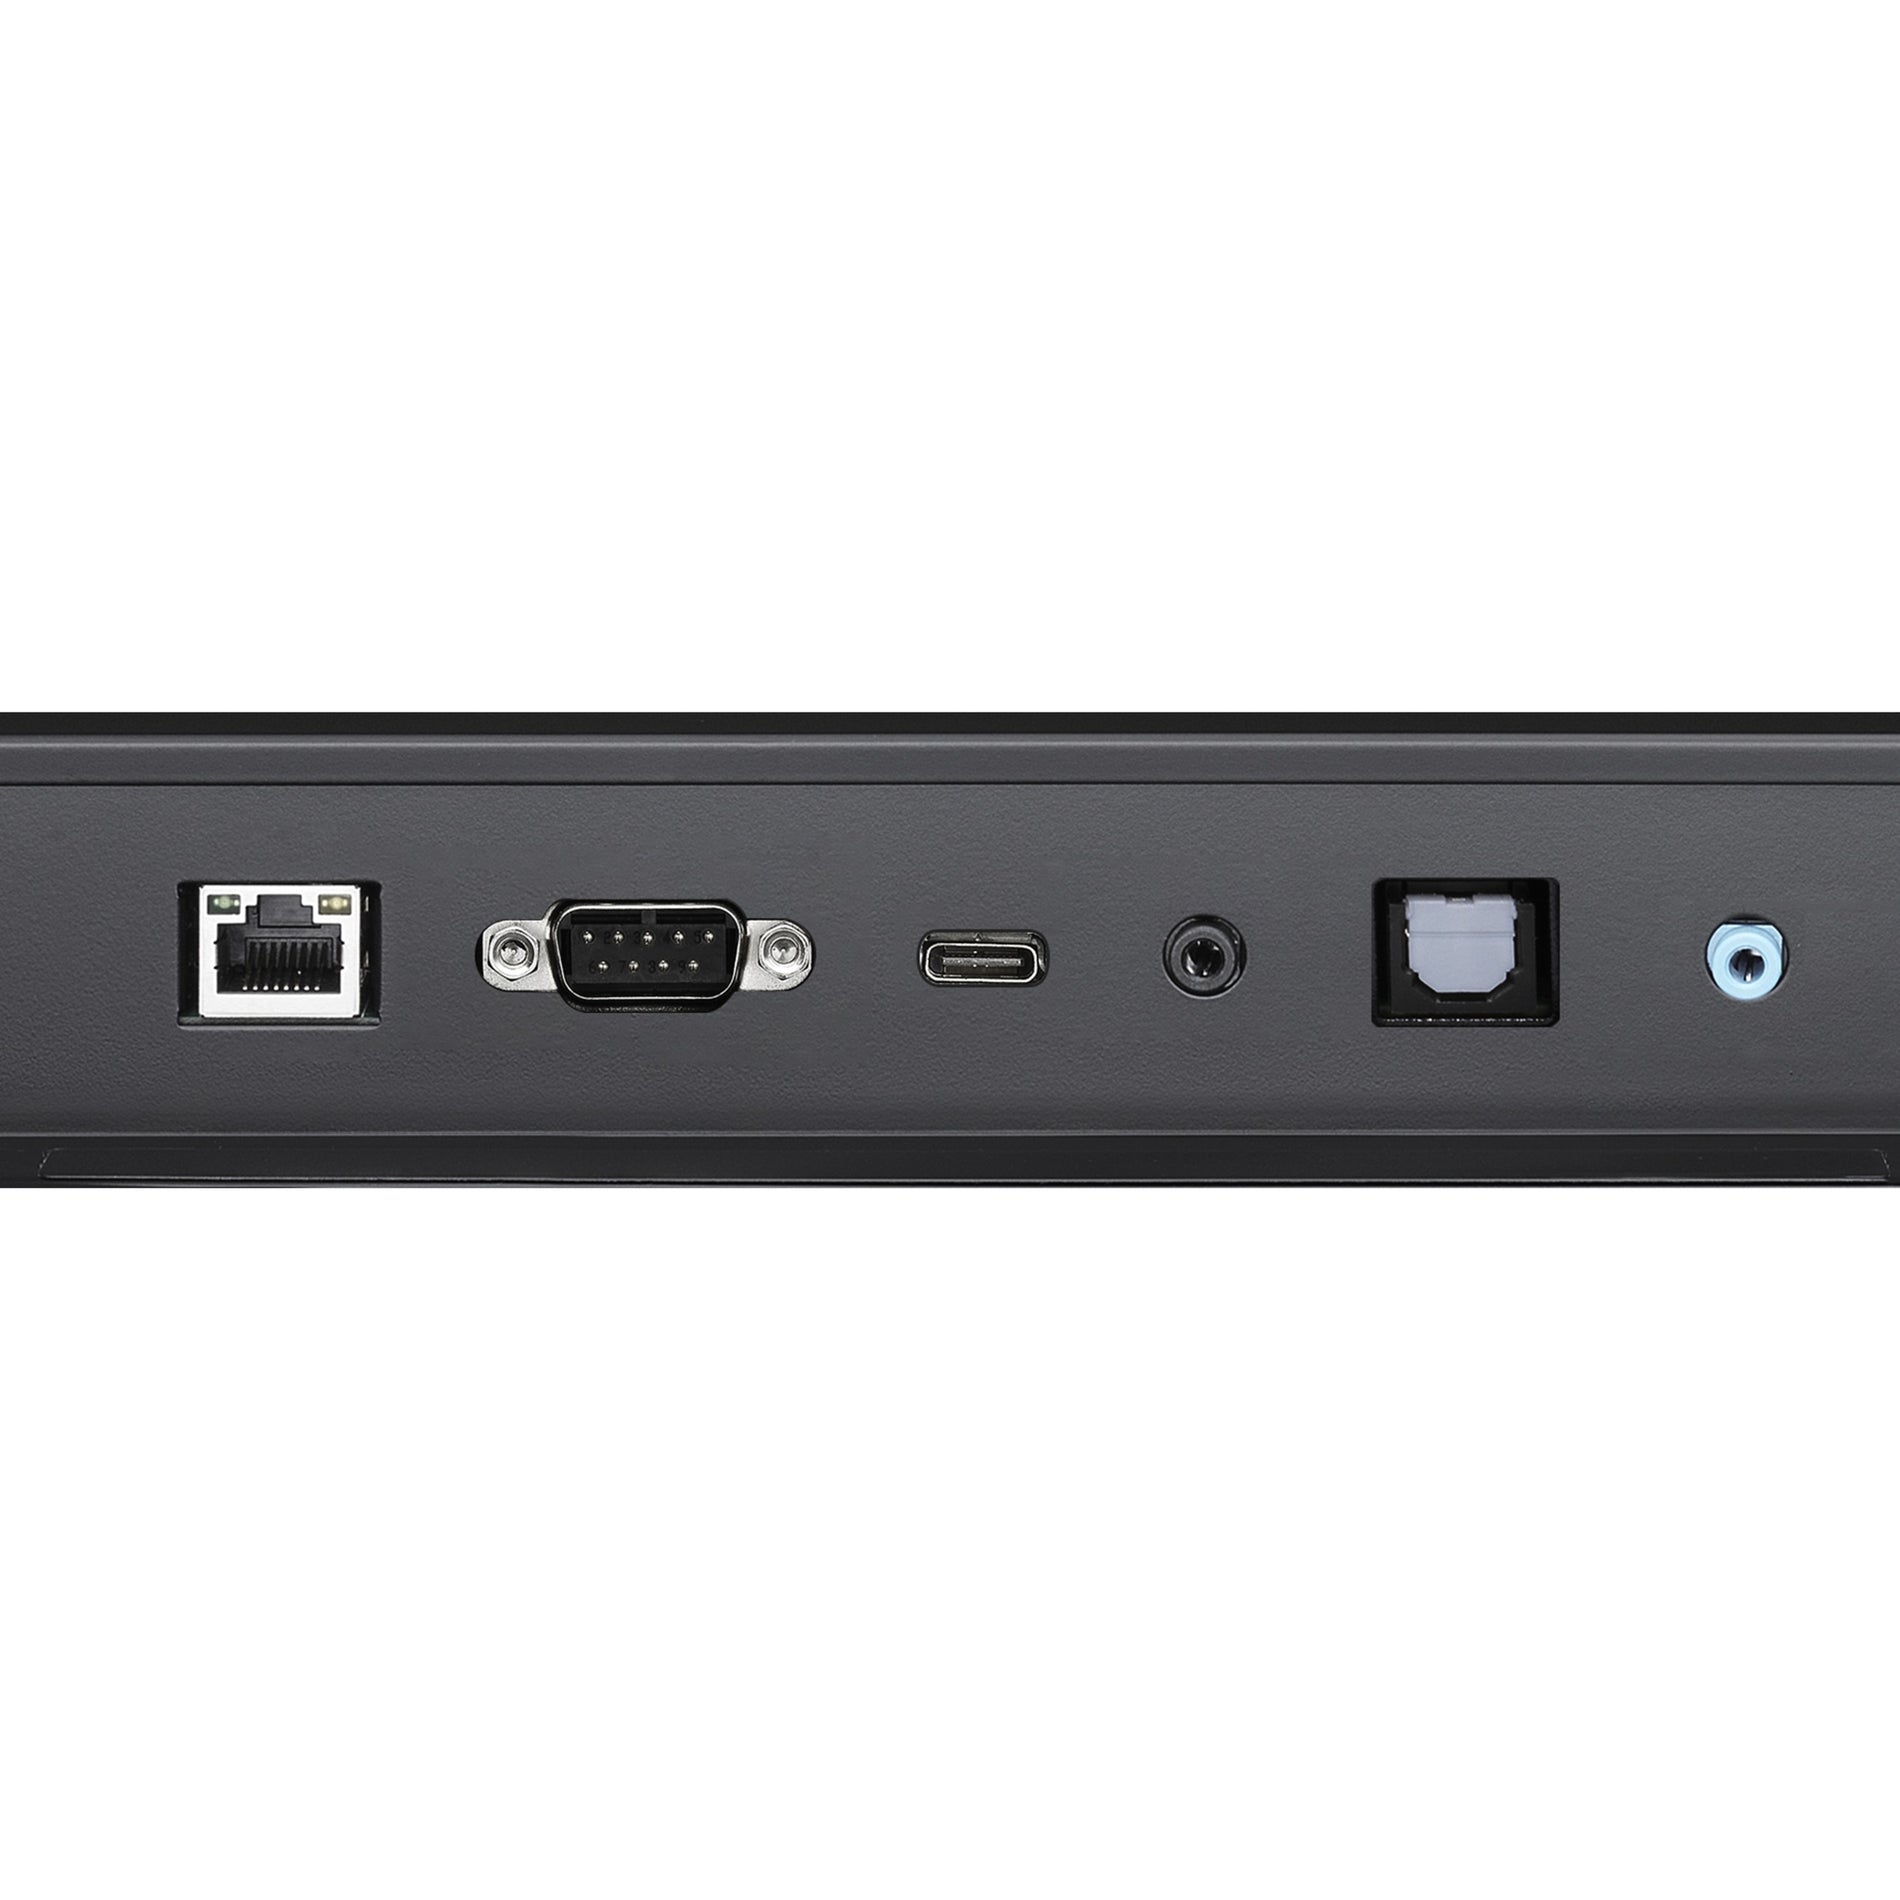 NEC Display E558 55" 4K UHD Display with Integrated ATSC/NTSC Tuner, High Dynamic Range (HDR), Energy Star